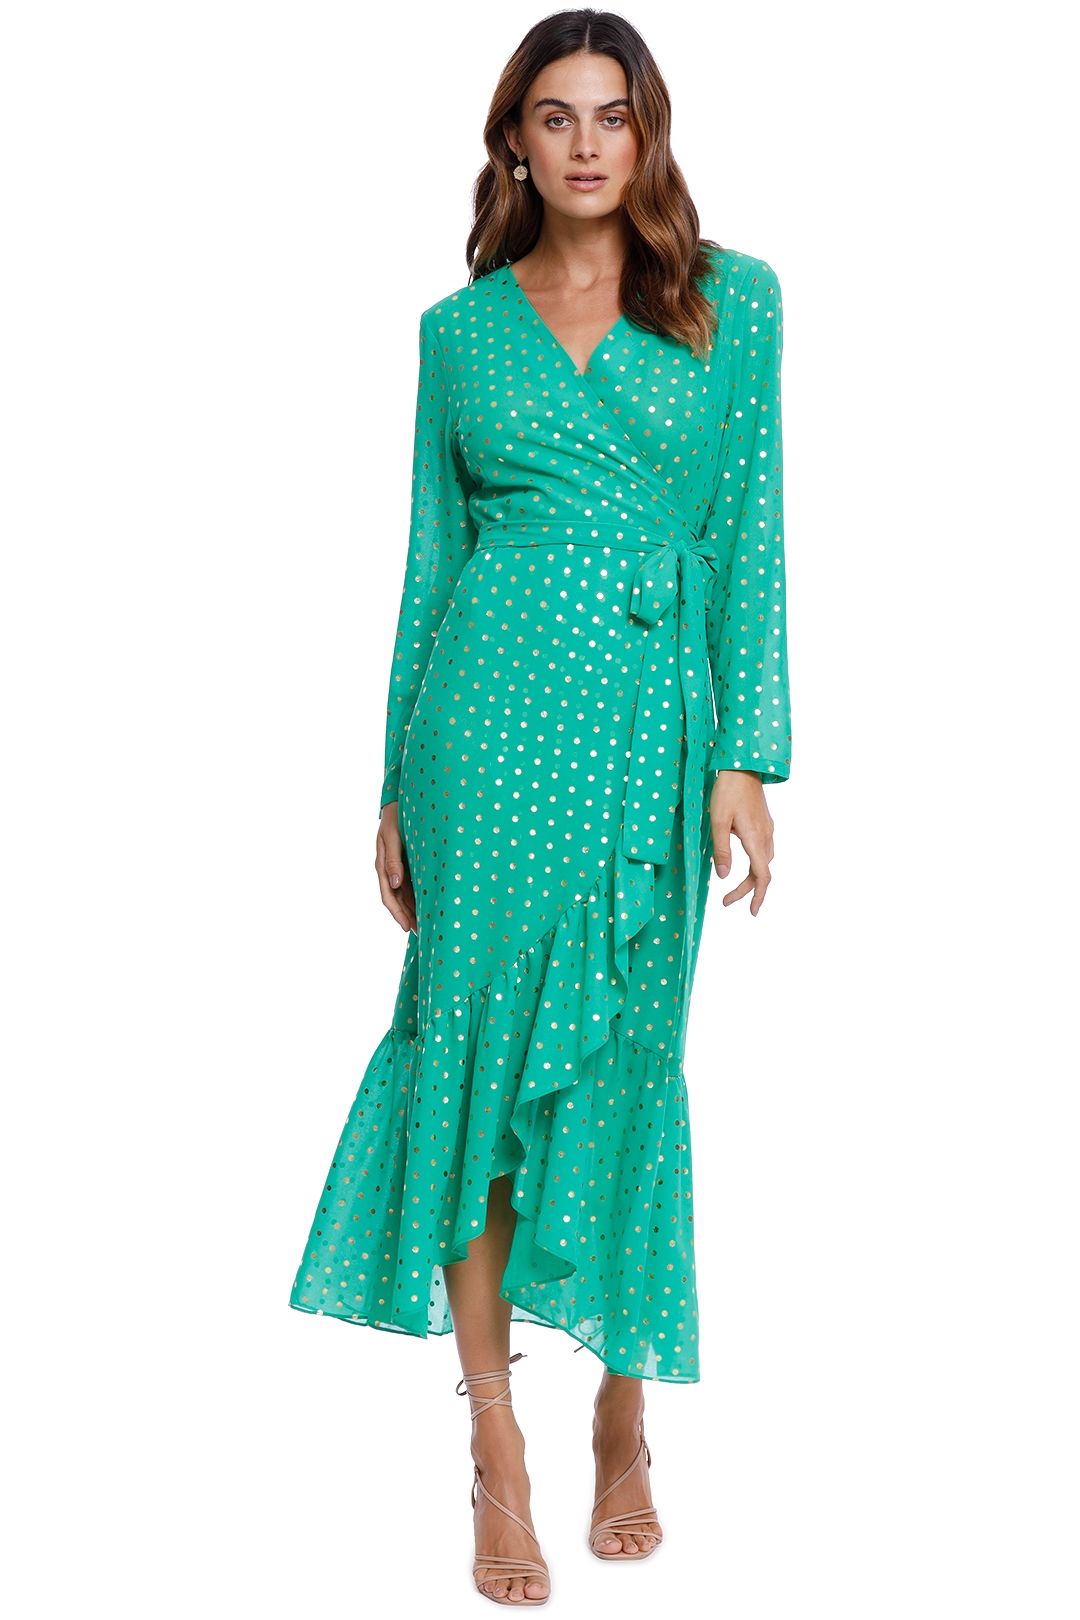 Never Fully Dressed Foil Spot Green Wrap Dress